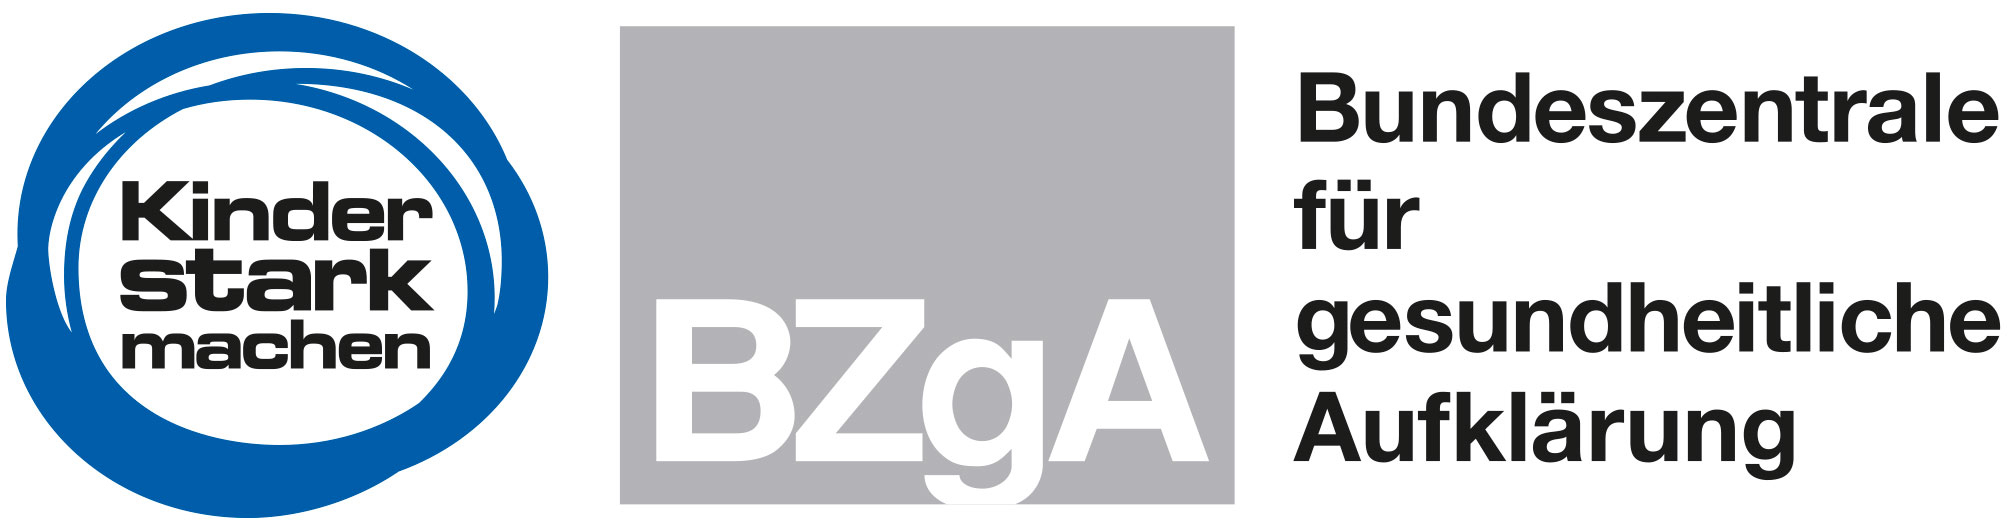 KinderStarkMachen BZgA Logo 2018 webopt